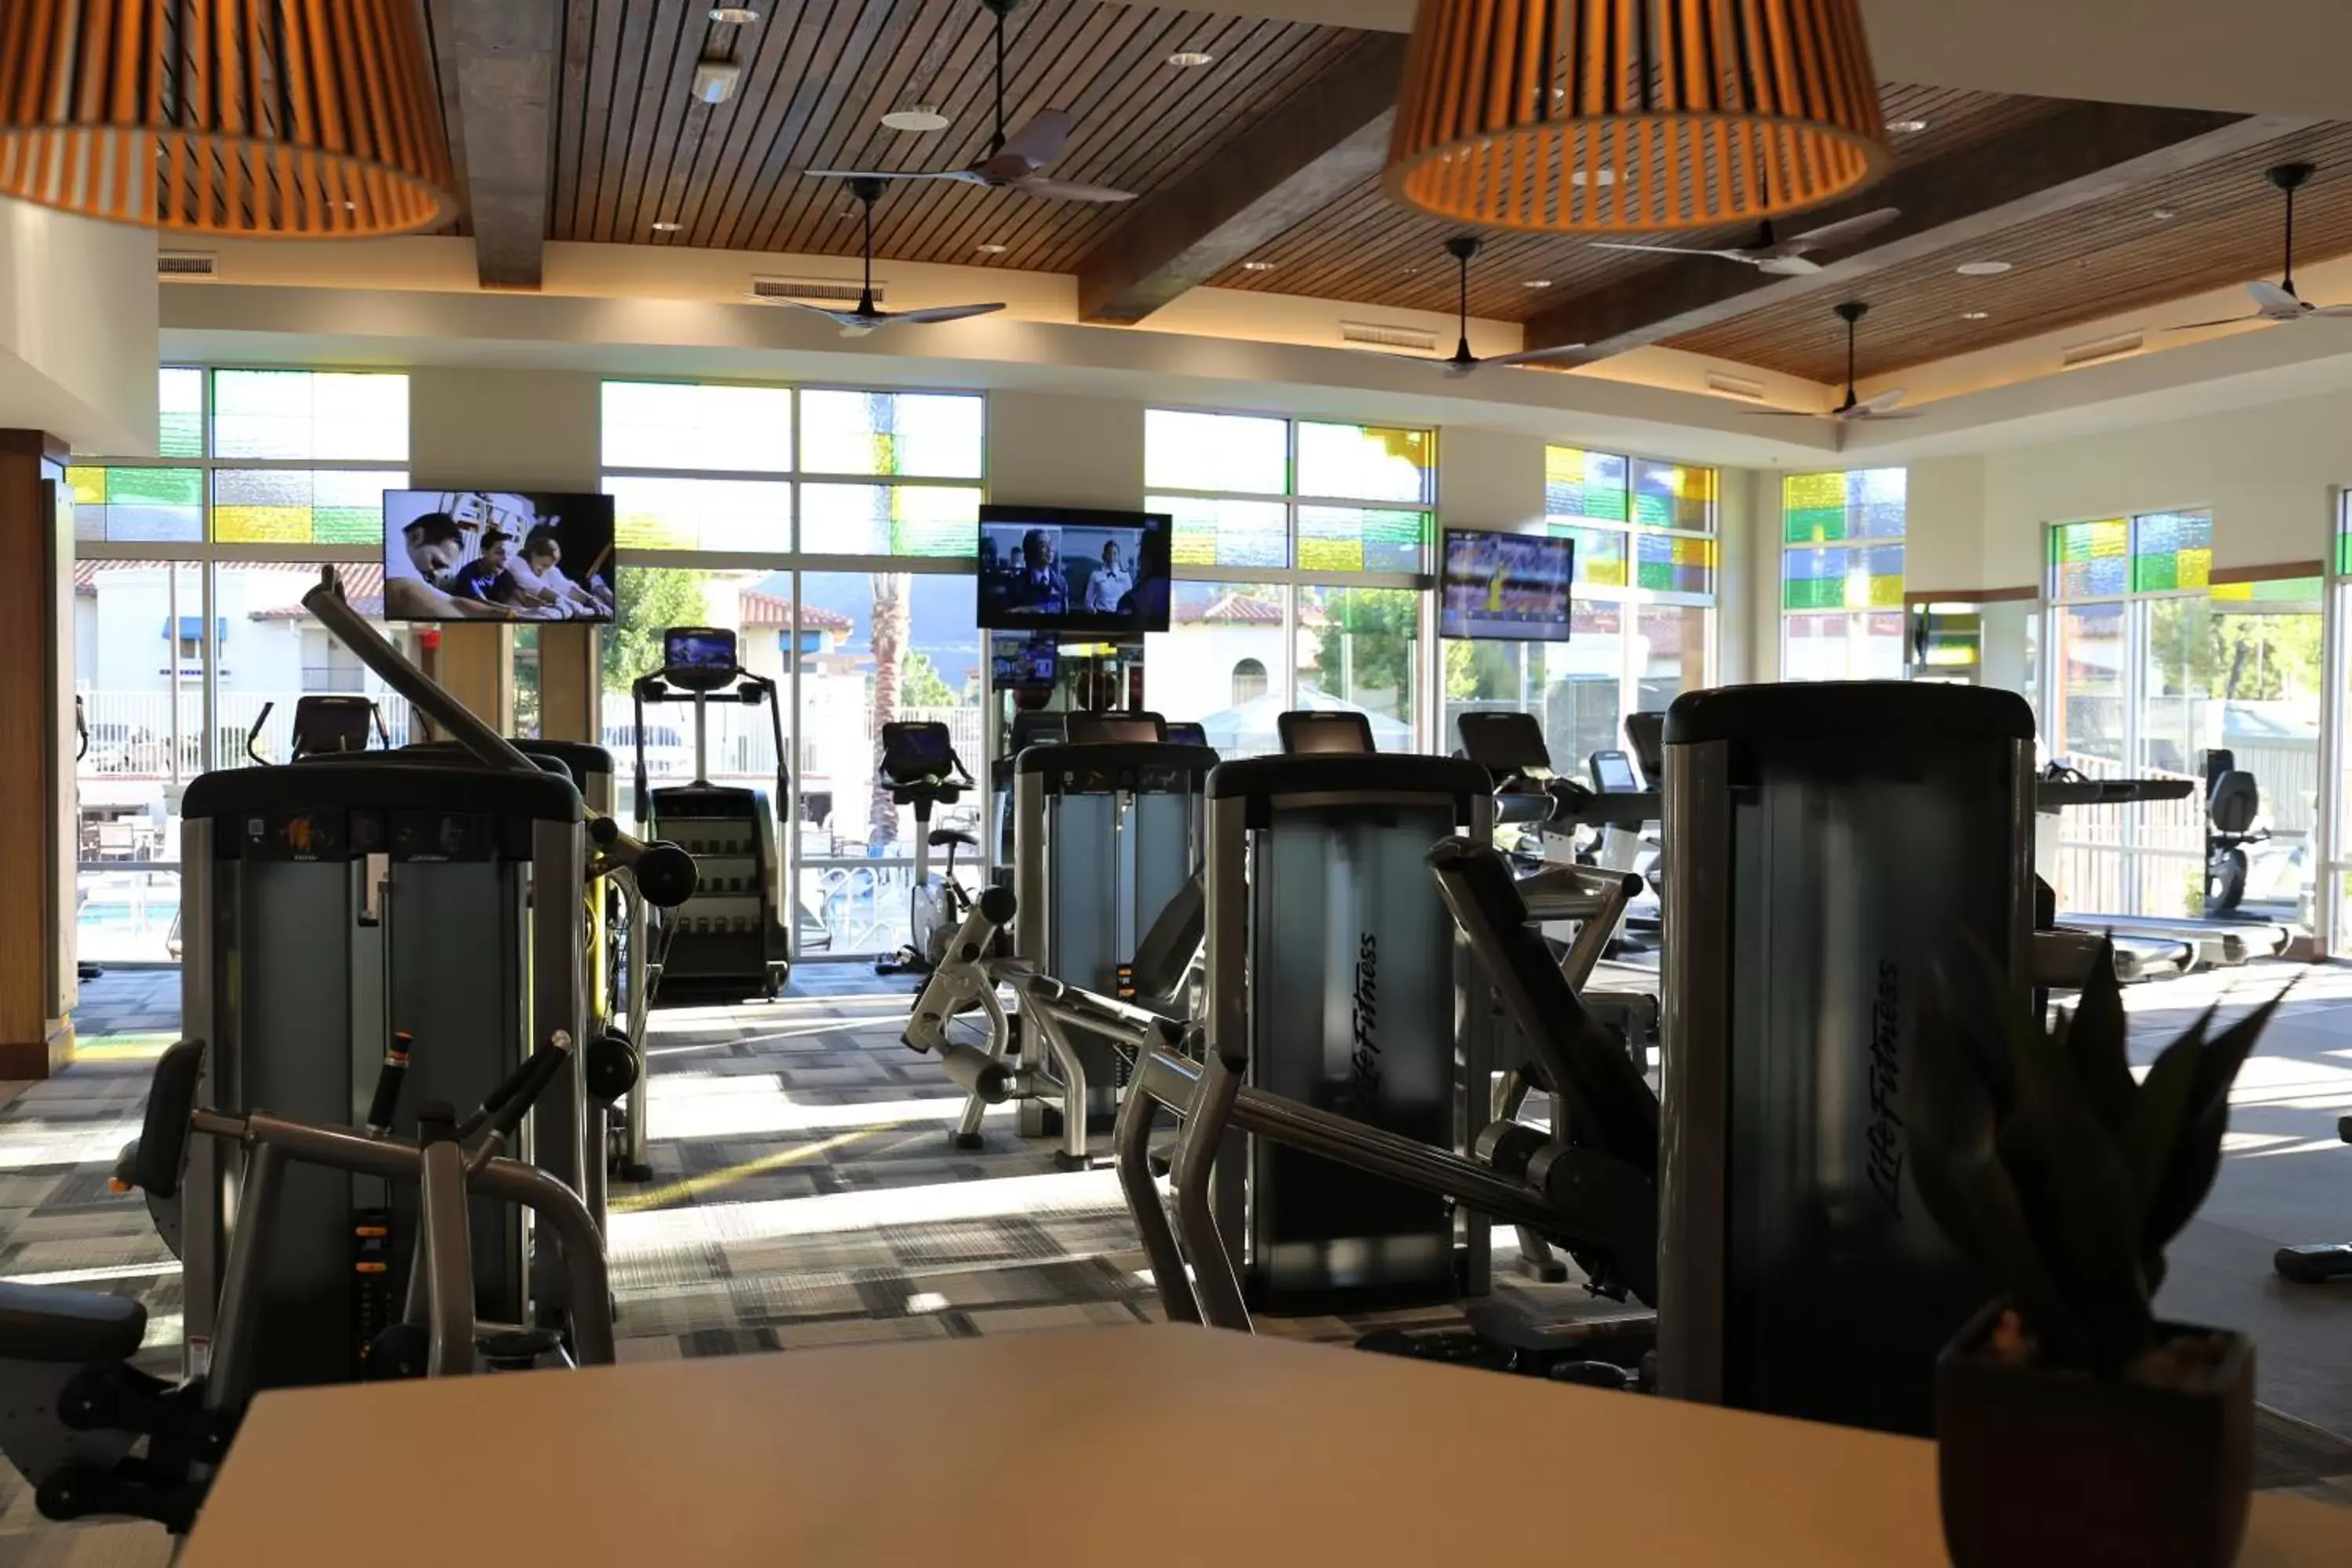 Fitness centre/facilities, Fitness Center/Facilities in Hyatt Vacation Club at the Welk